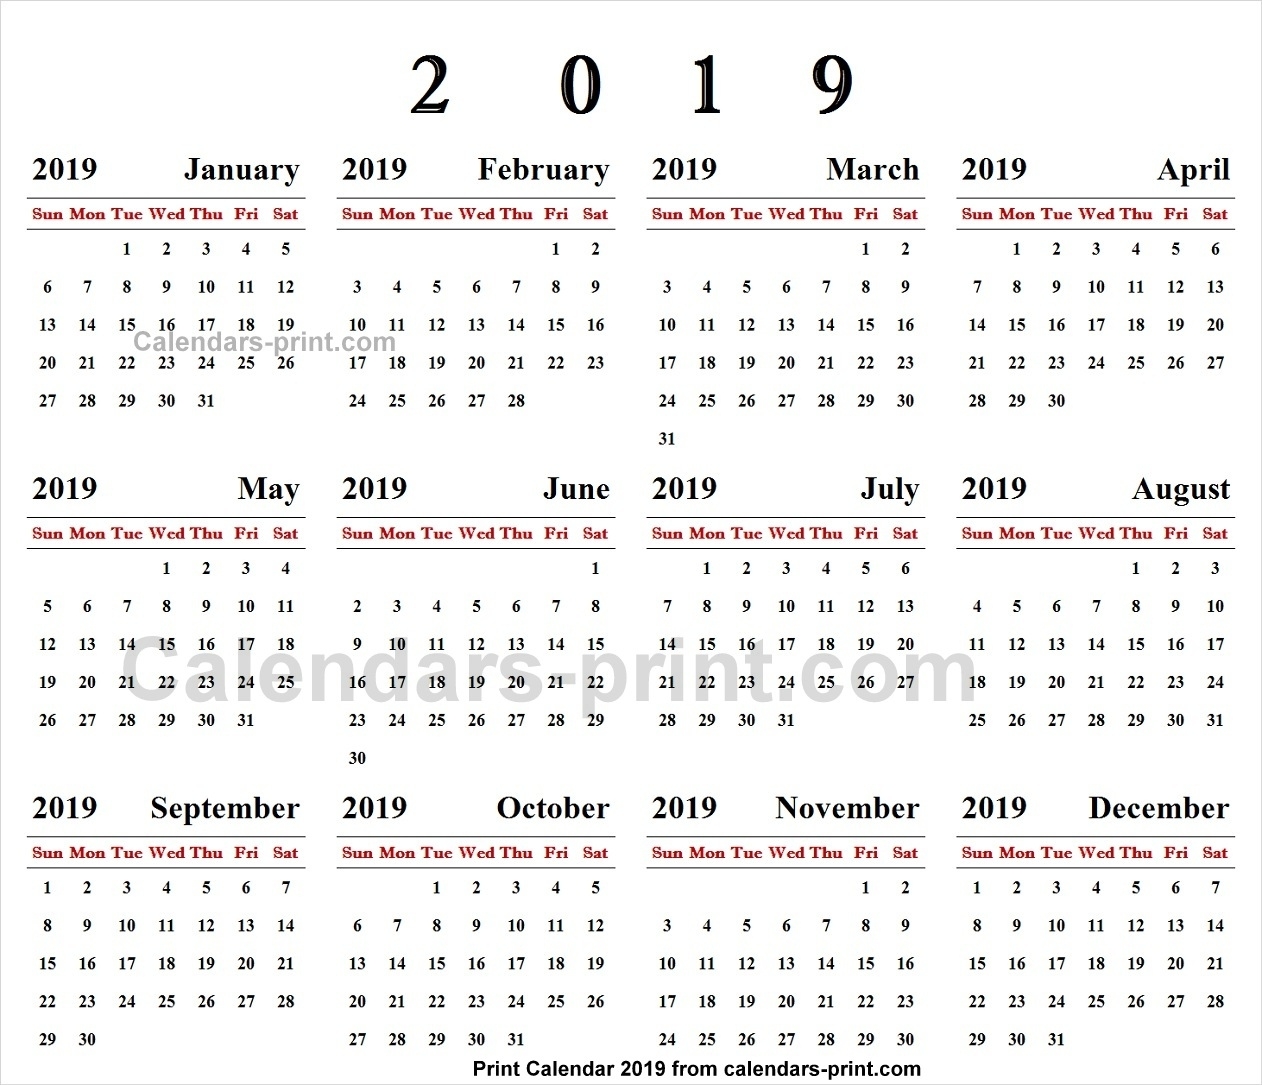 Online Calendar 2019 Uk Archives - Calendar To Print Calendar Printing Online Uk